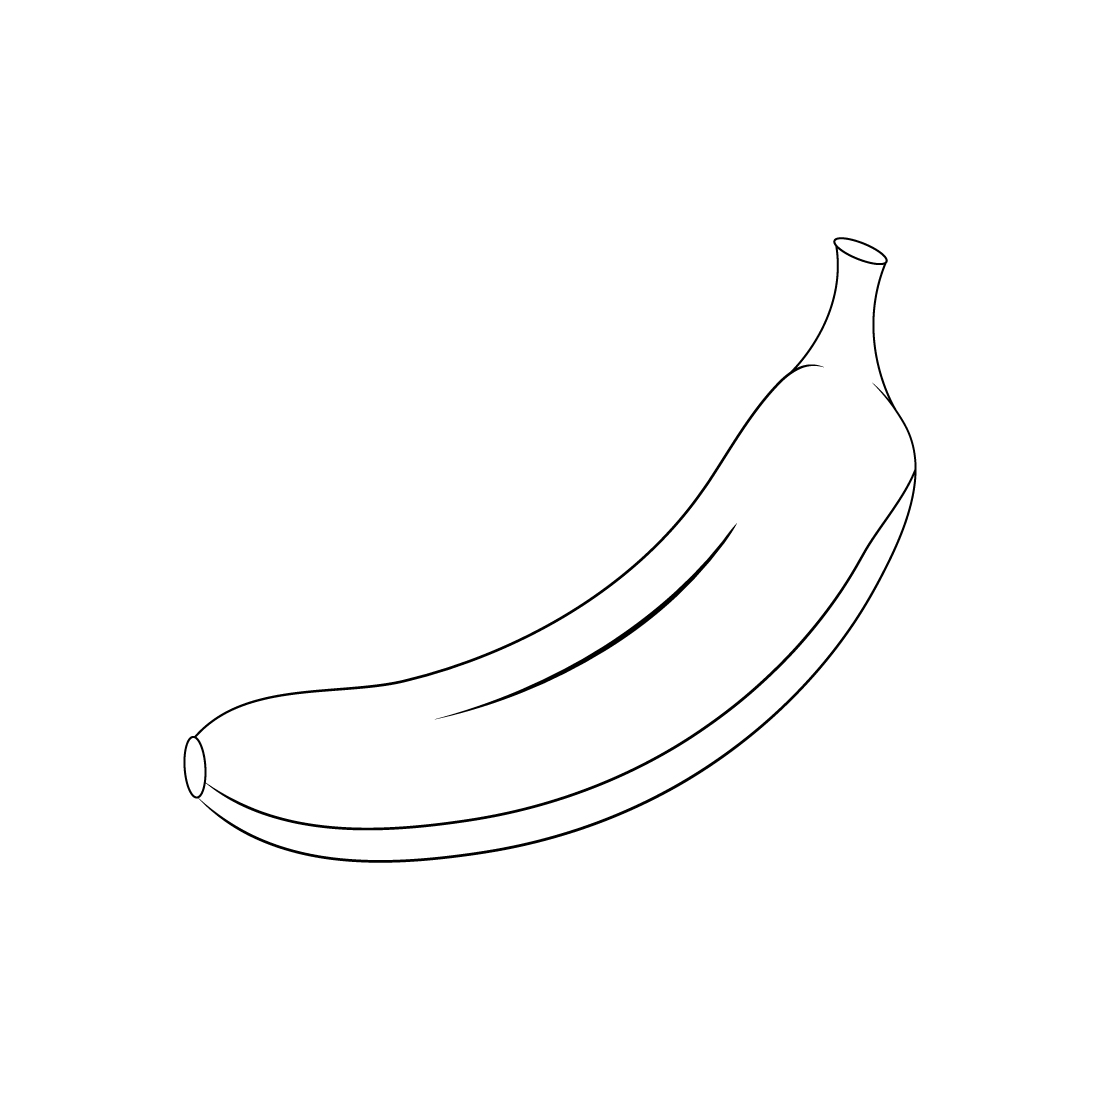 Banana Fruits Coloring Page preview image.